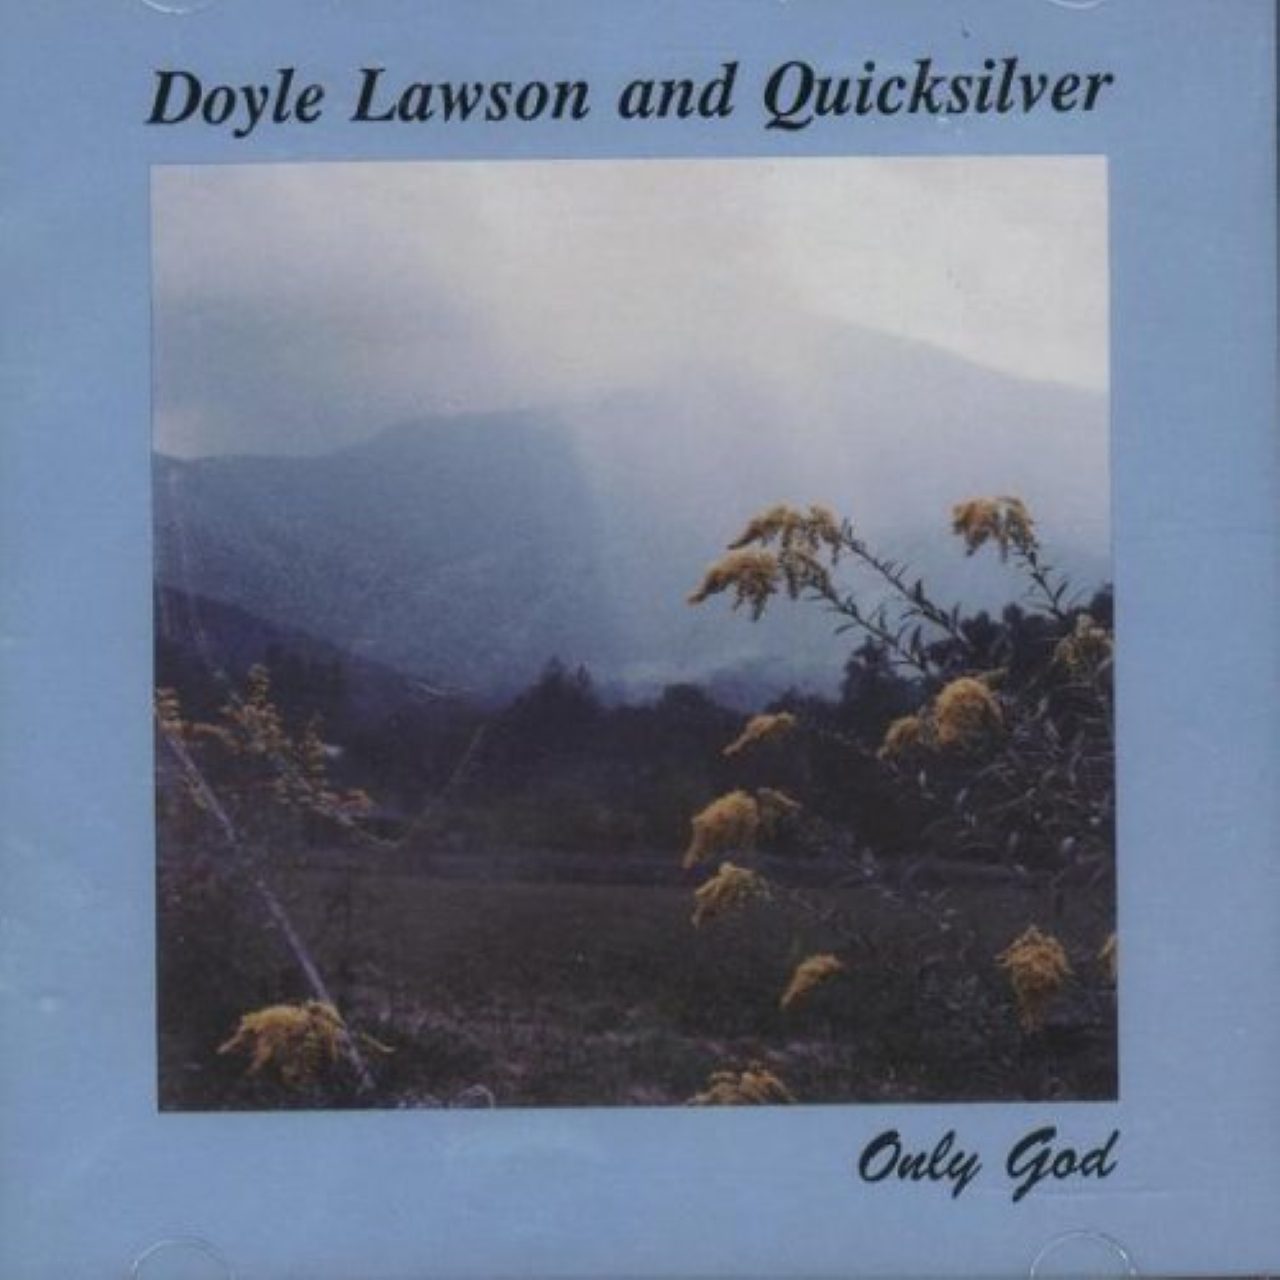 Doyle Lawson & Quicksilver - Only God cover album